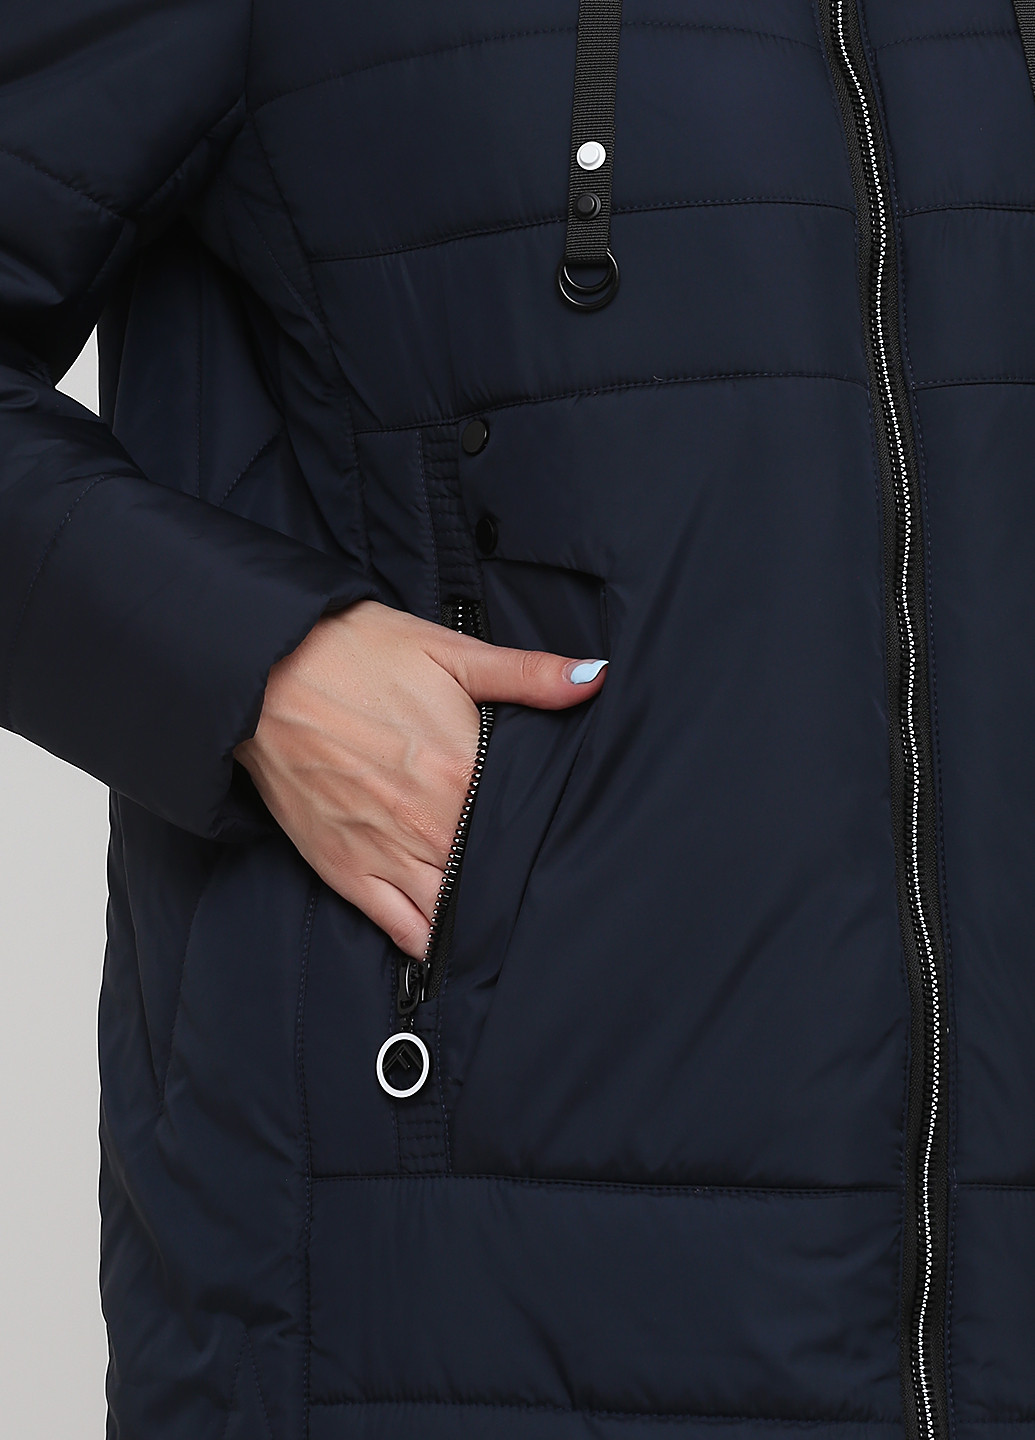 Темно-синяя зимняя куртка Eva Classic